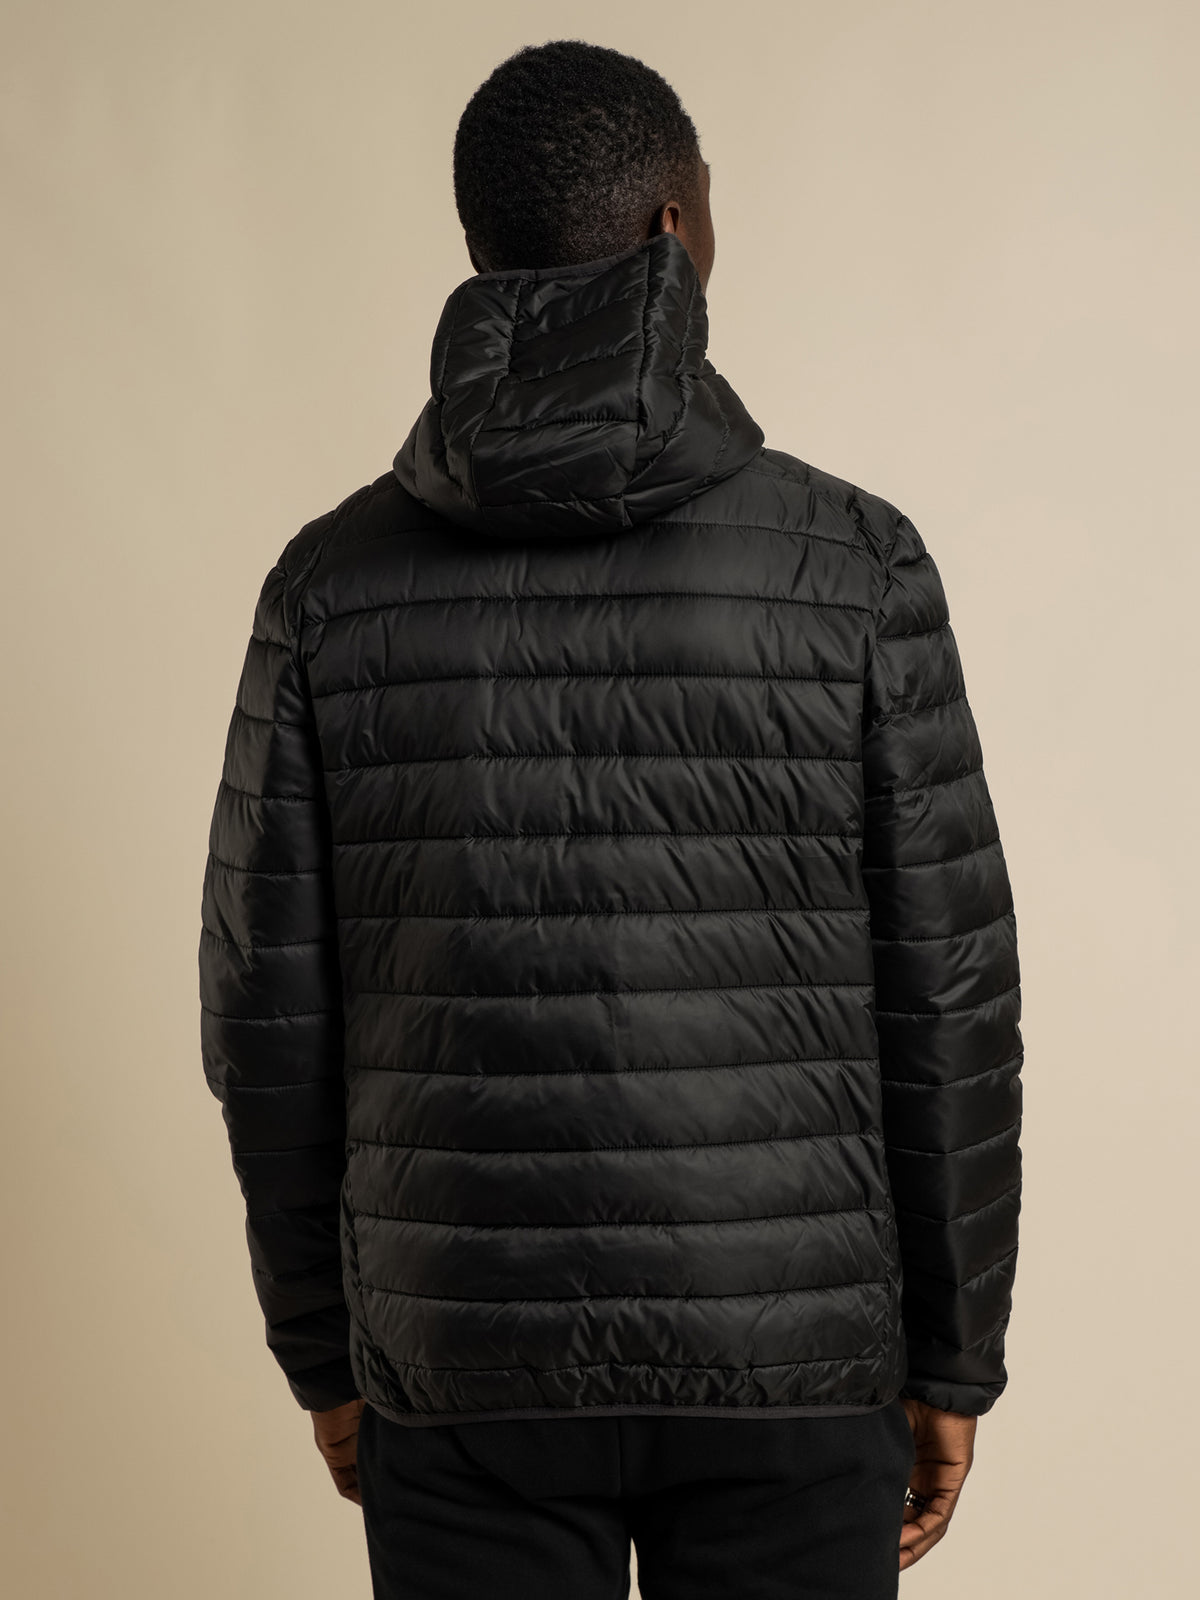 Lombardy Puffer Jacket in Black